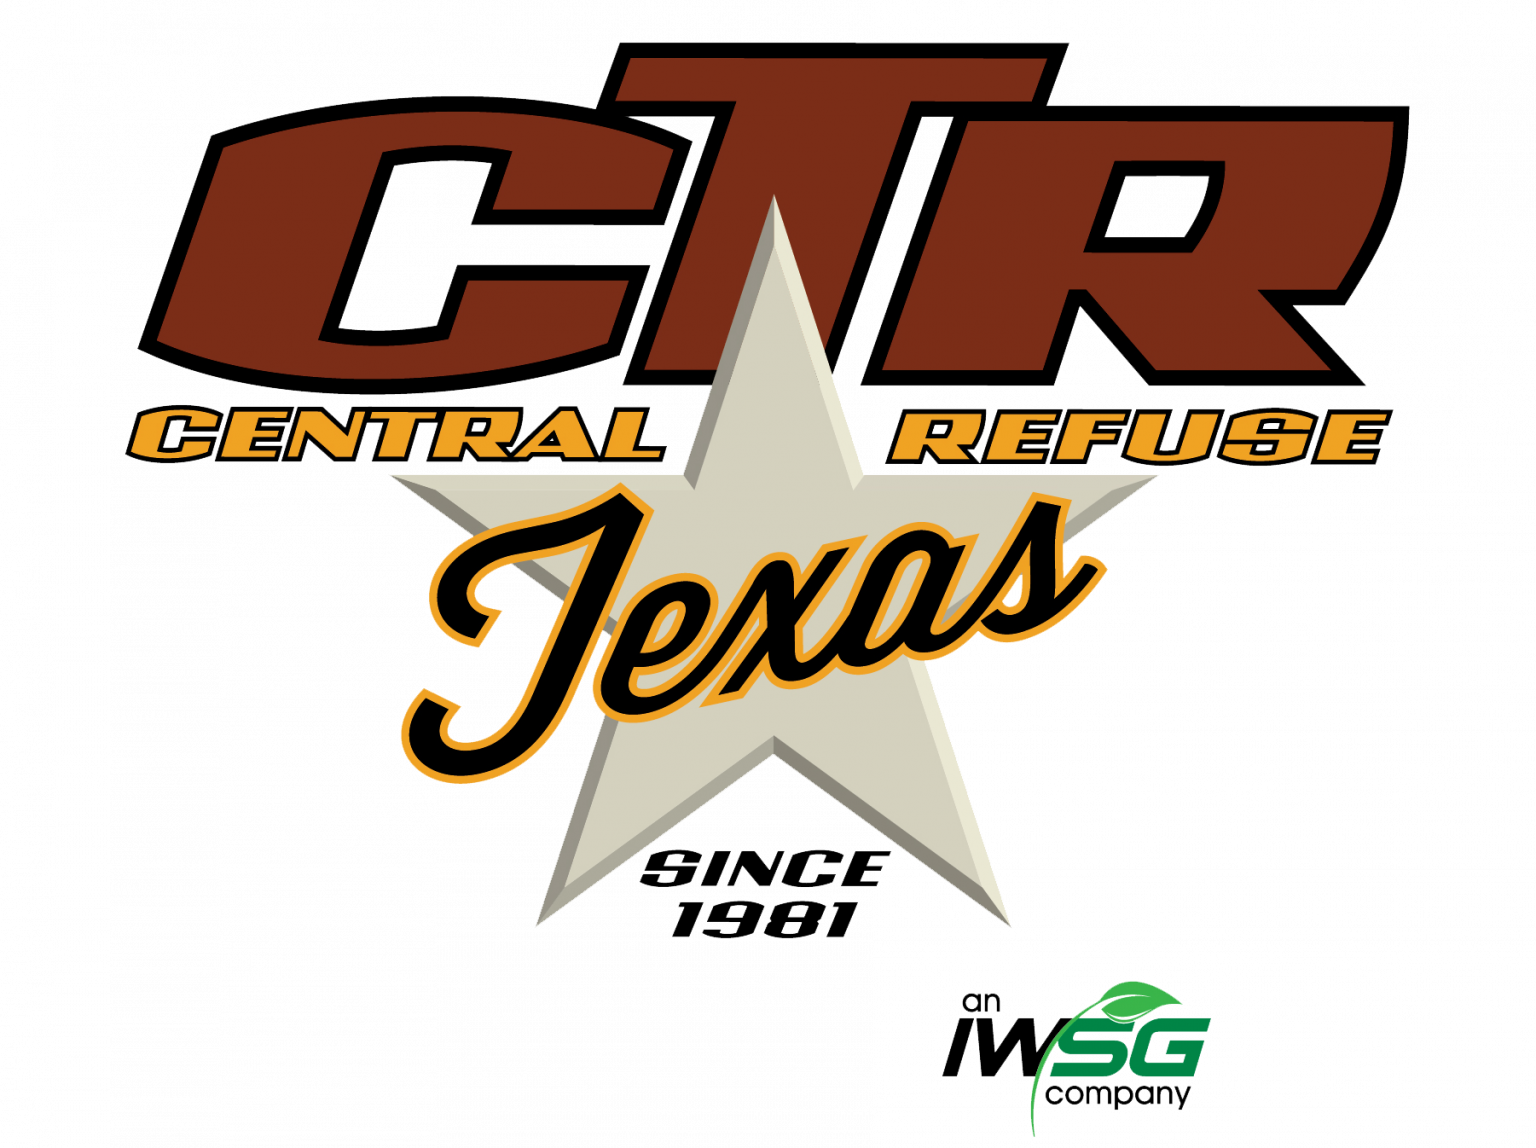 Central Texas Refuse